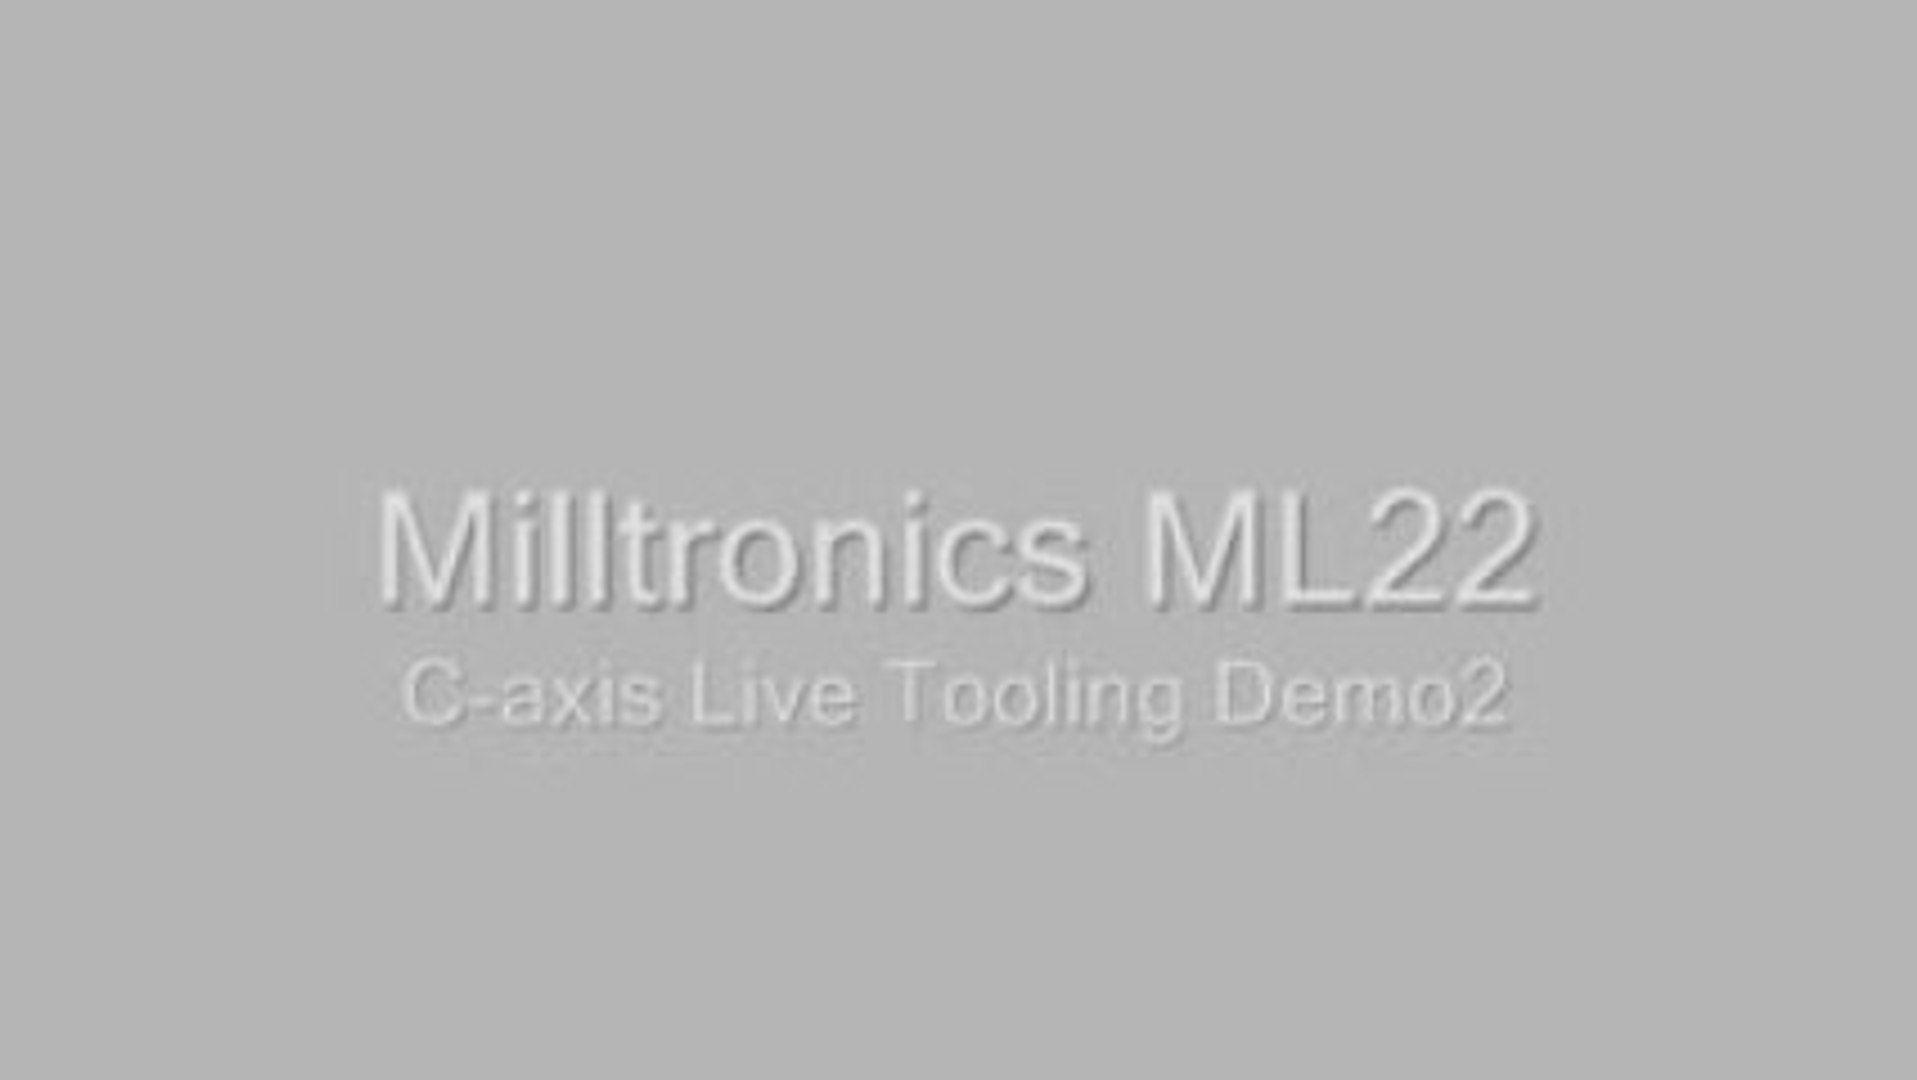 Milltronics Logo - Milltronics ML22 C-axis Combination Lathe